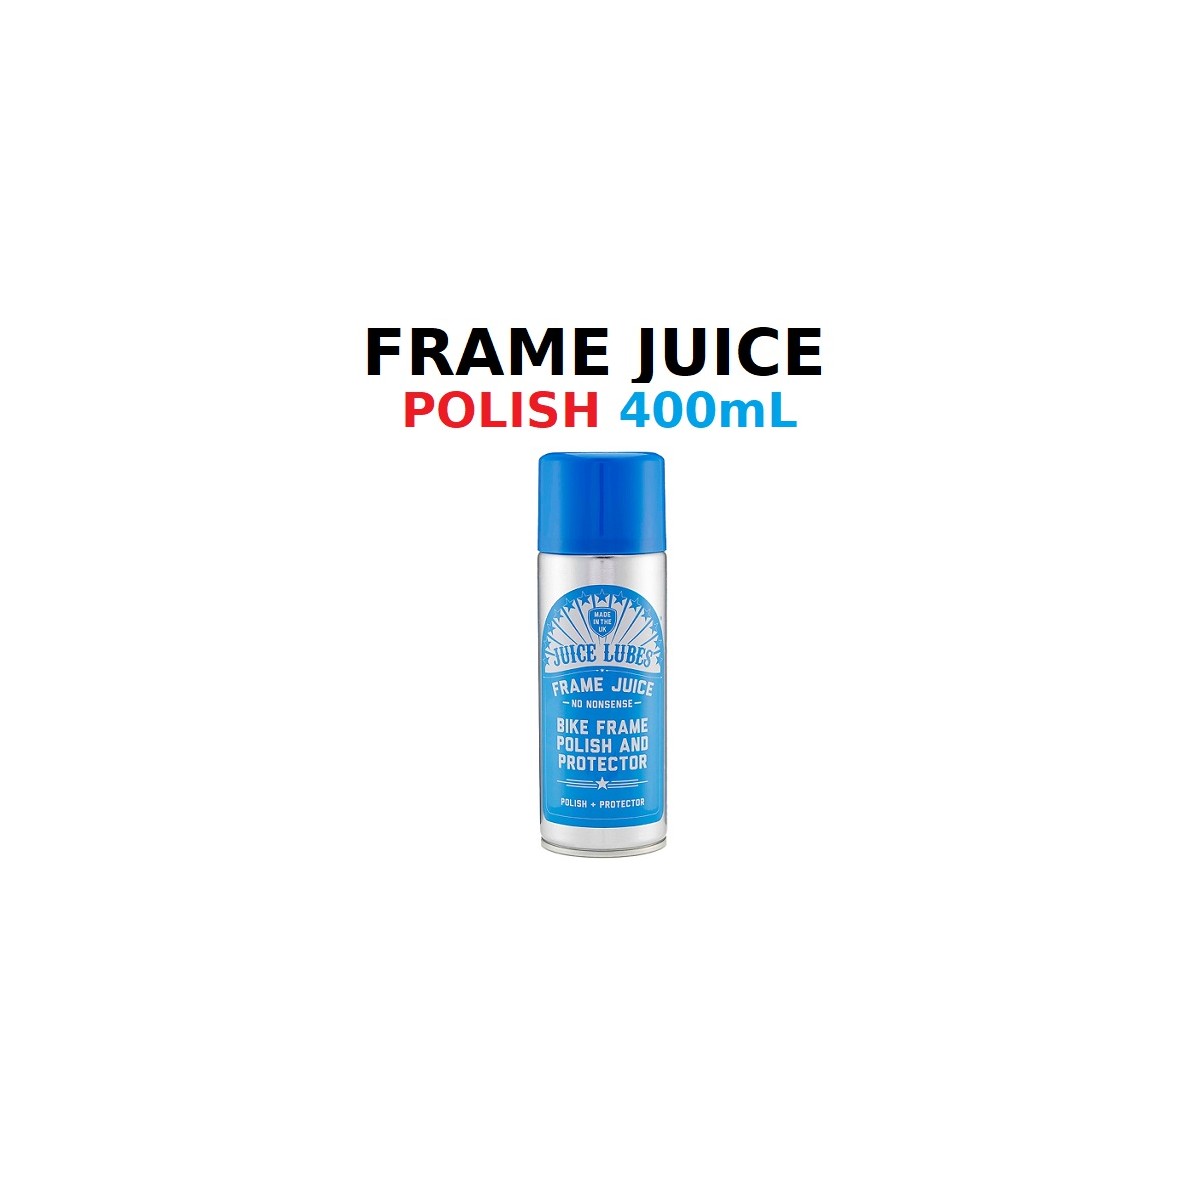 SPRAY POLISH - Frame juice - JL-NET-FRAME